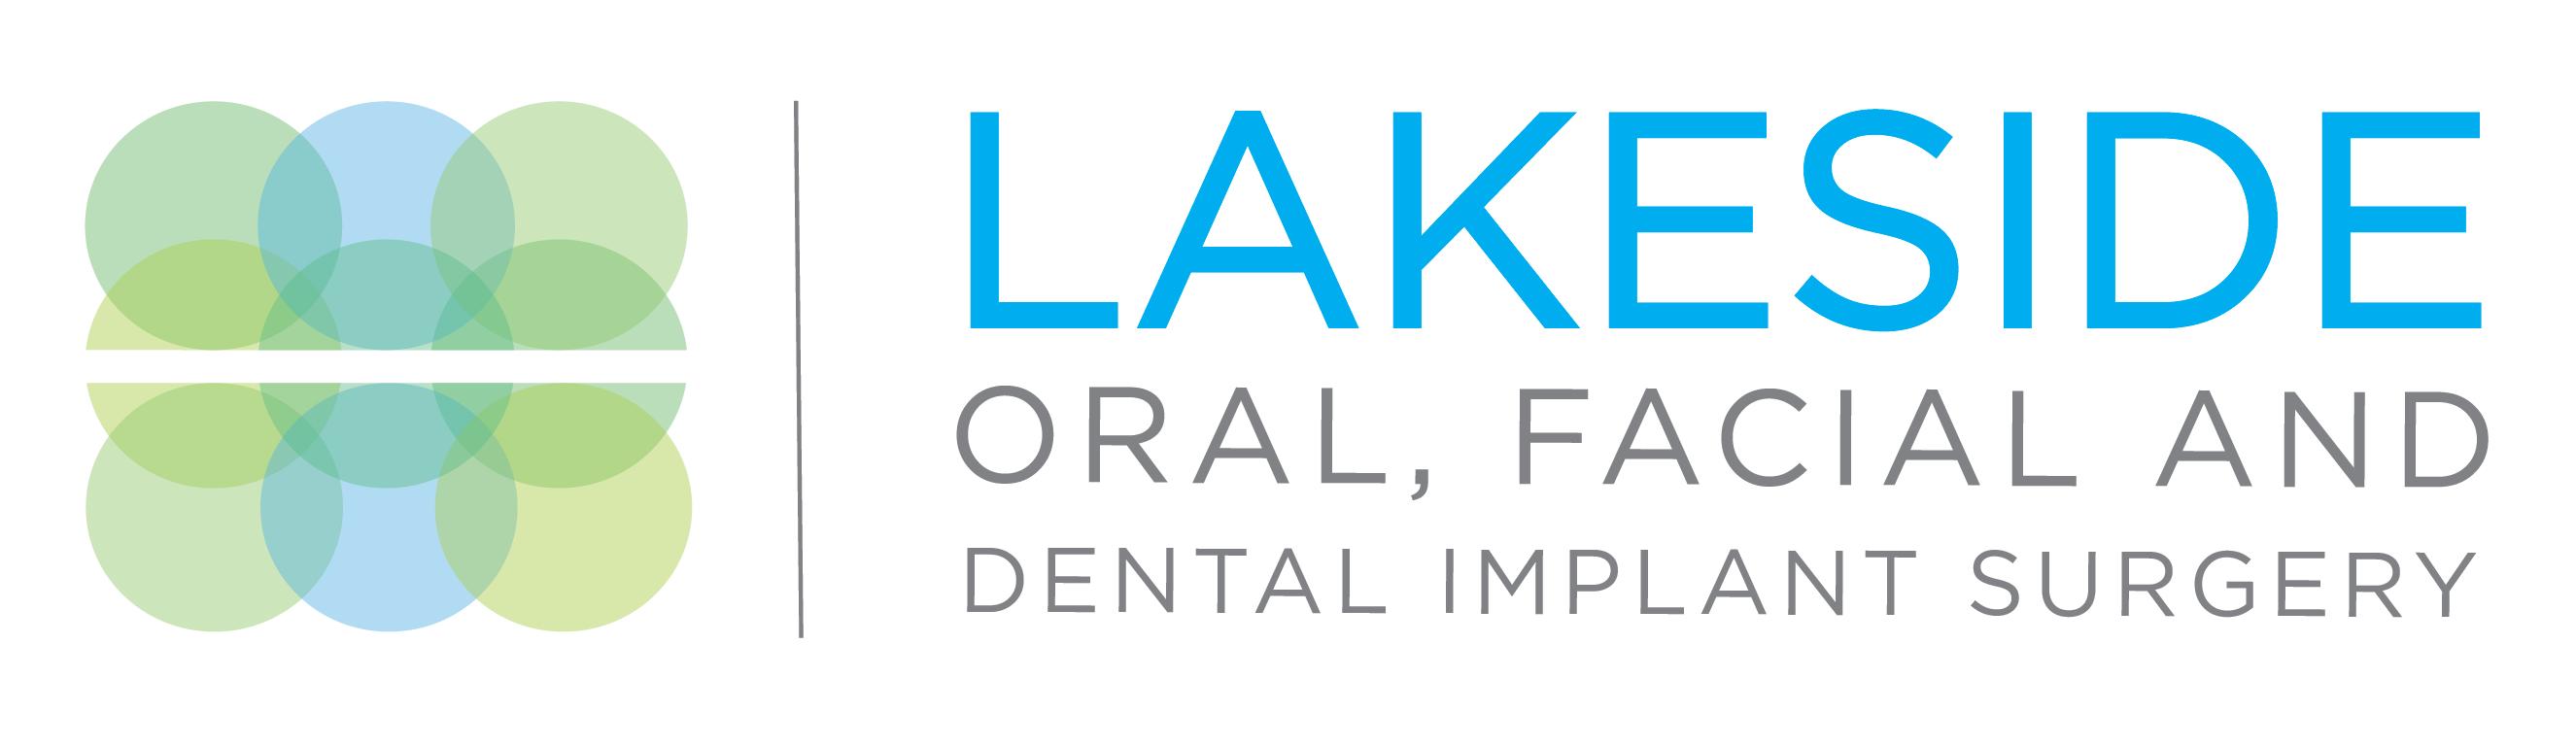 Lakeside Oral, Facial and Dental Implant Surgery Photo